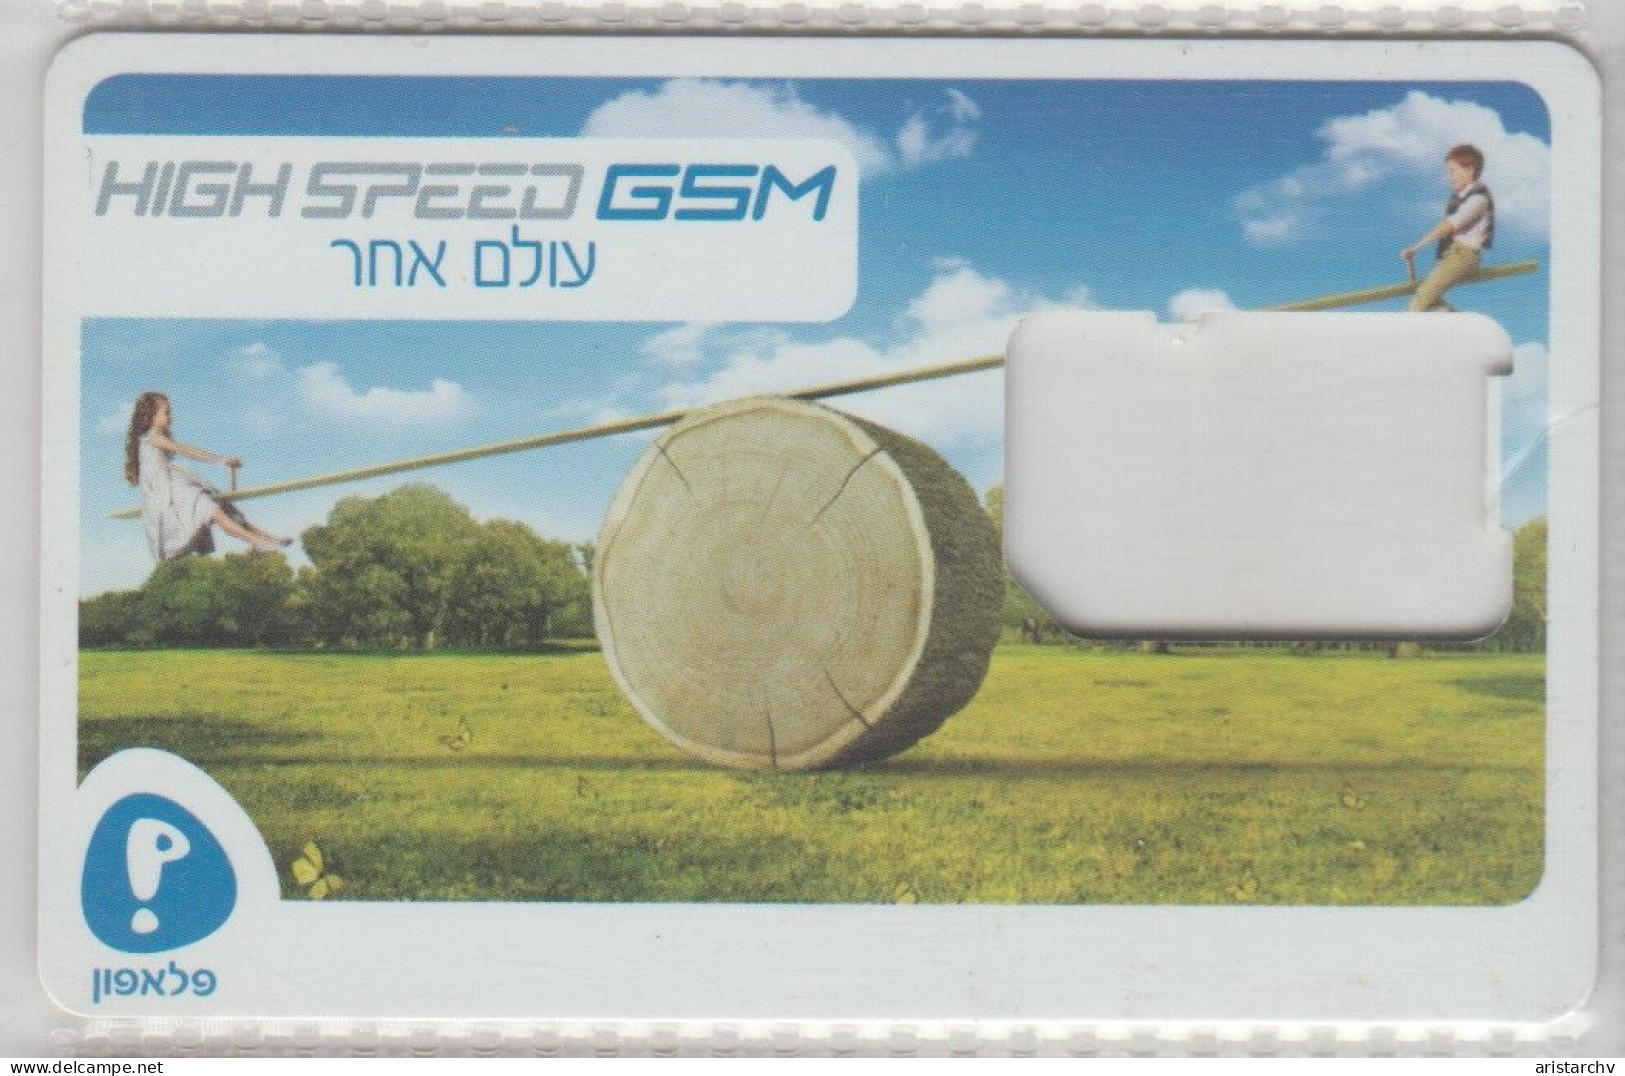 ISRAEL PELEPHONE HIGH SPEED GSM USED PHONE CARD - Israel